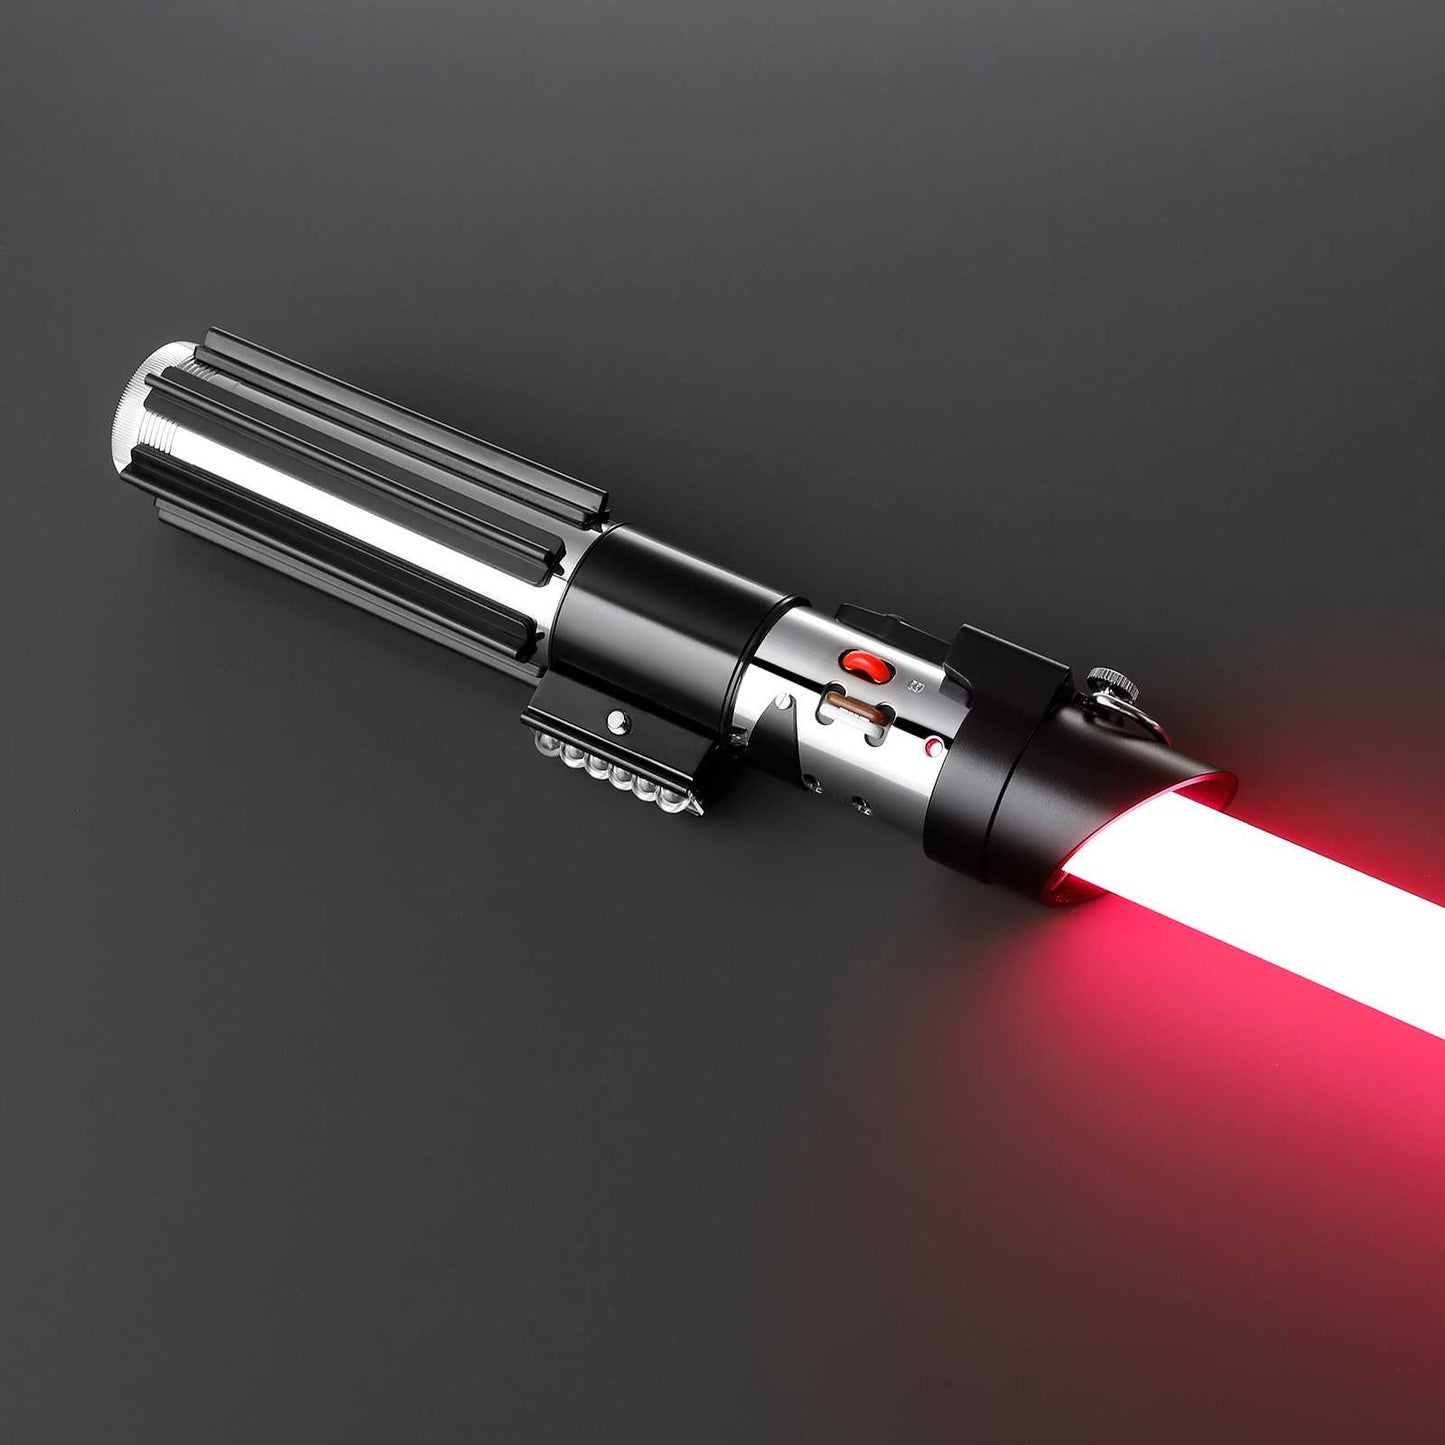 Neopixel Lightsaber - Model Vader E5